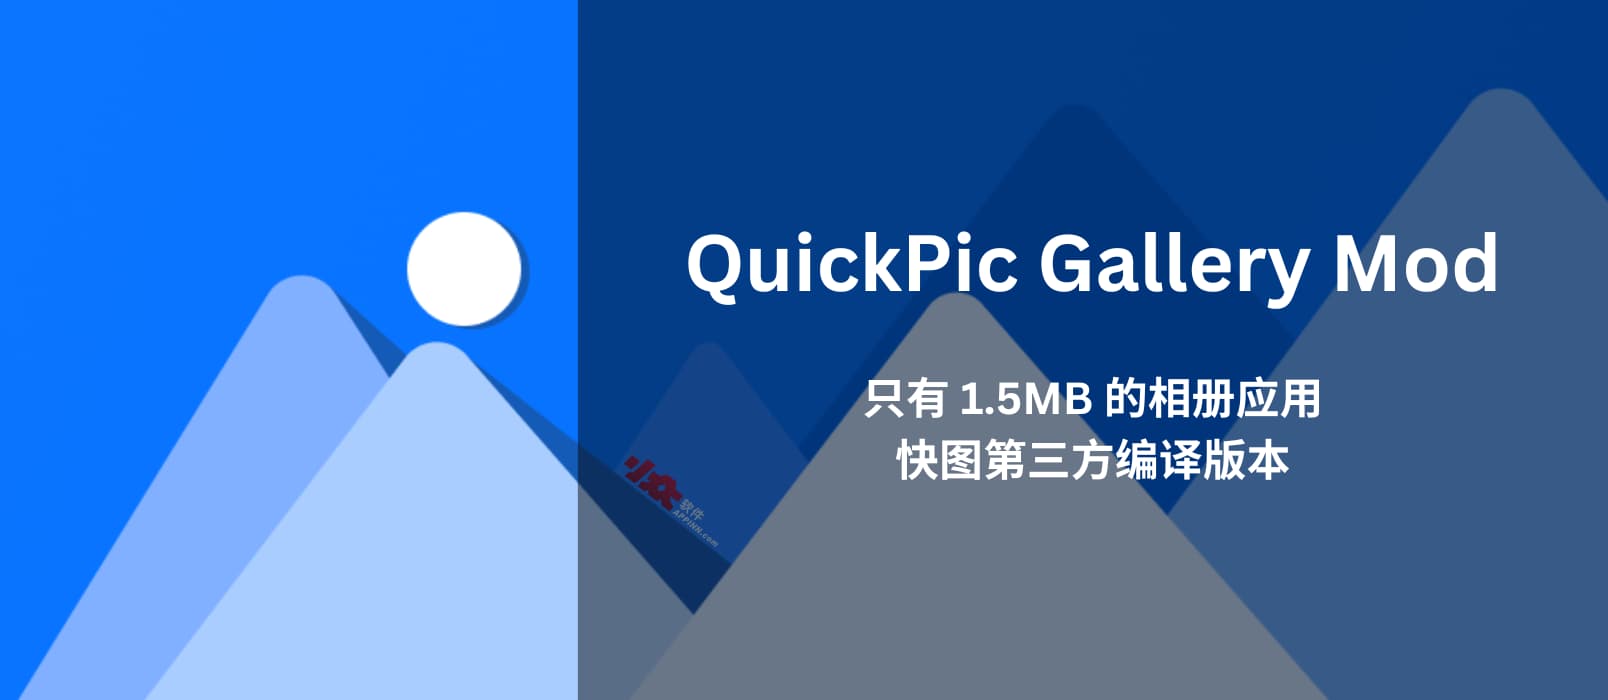 QuickPic Gallery Mod - 只有 1.5MB 的相册应用，快图第三方编译版本[Android]